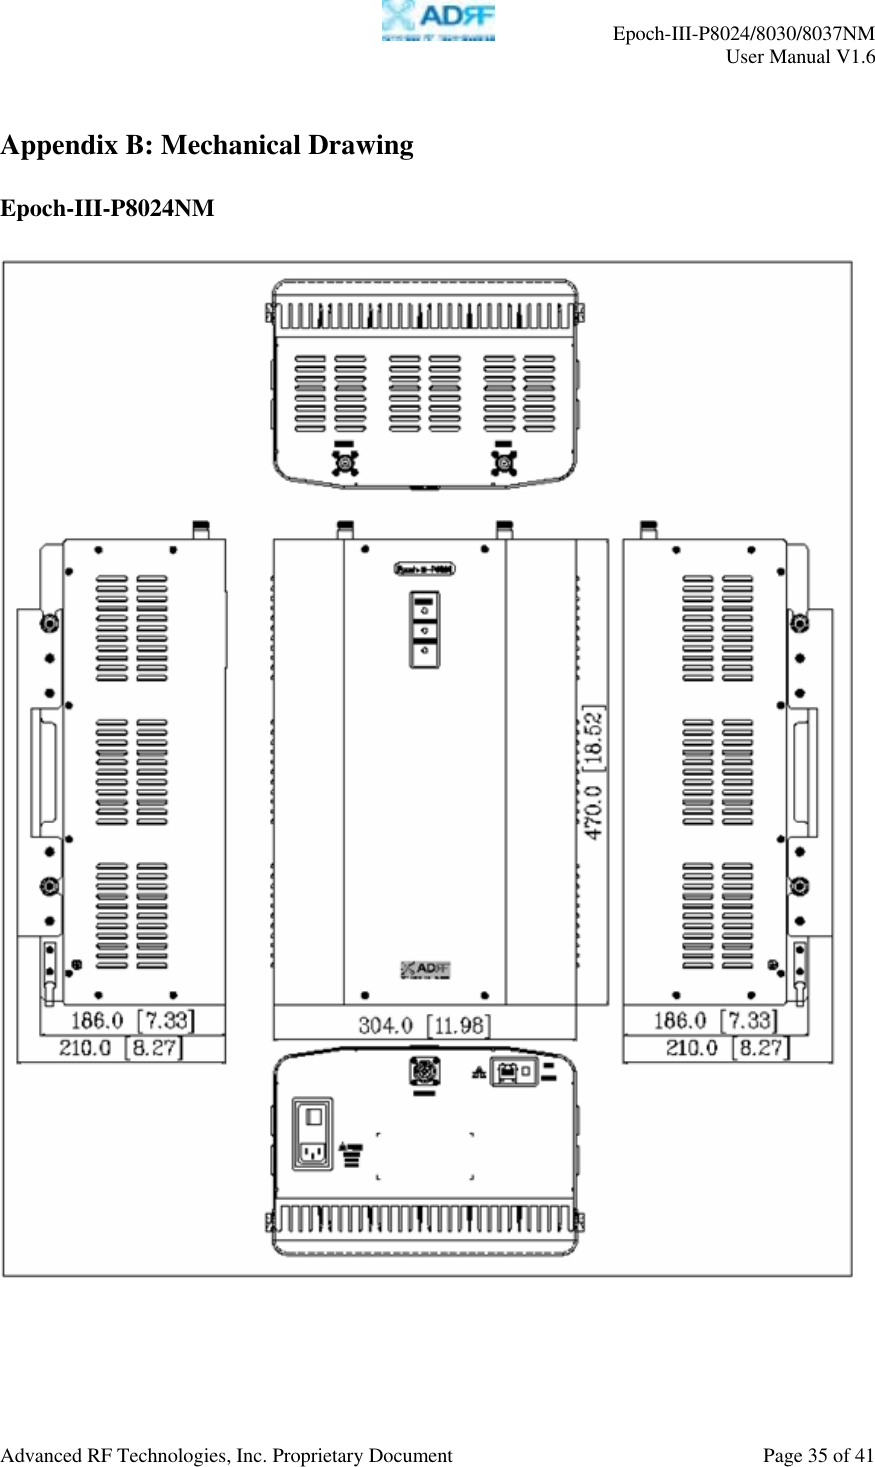     Epoch-III-P8024/8030/8037NM  User Manual V1.6  Advanced RF Technologies, Inc. Proprietary Document  Page 35 of 41  Appendix B: Mechanical Drawing  Epoch-III-P8024NM    